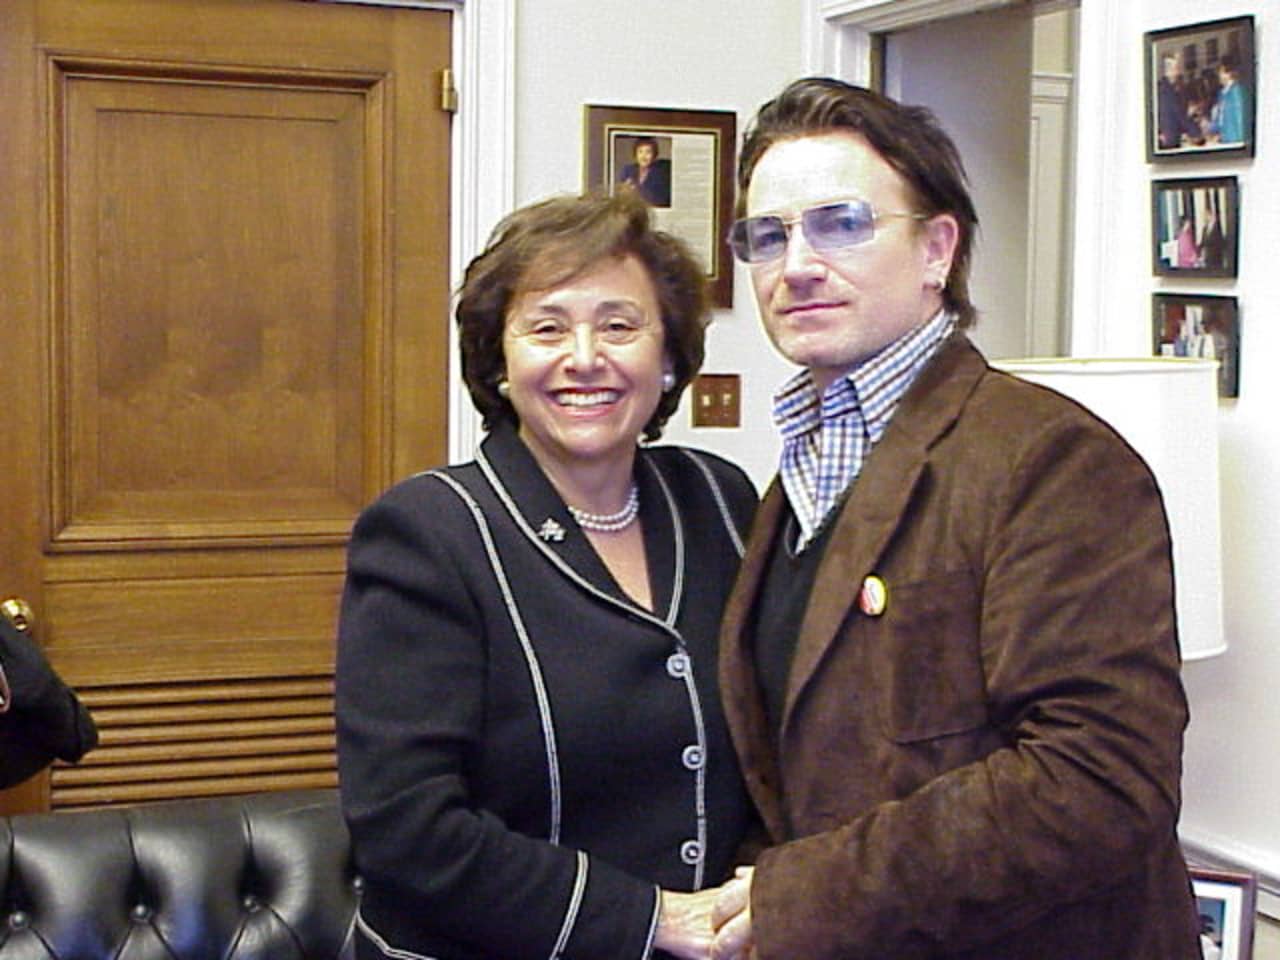 Congresswoman Nita Lowey with Bono back in 2002.